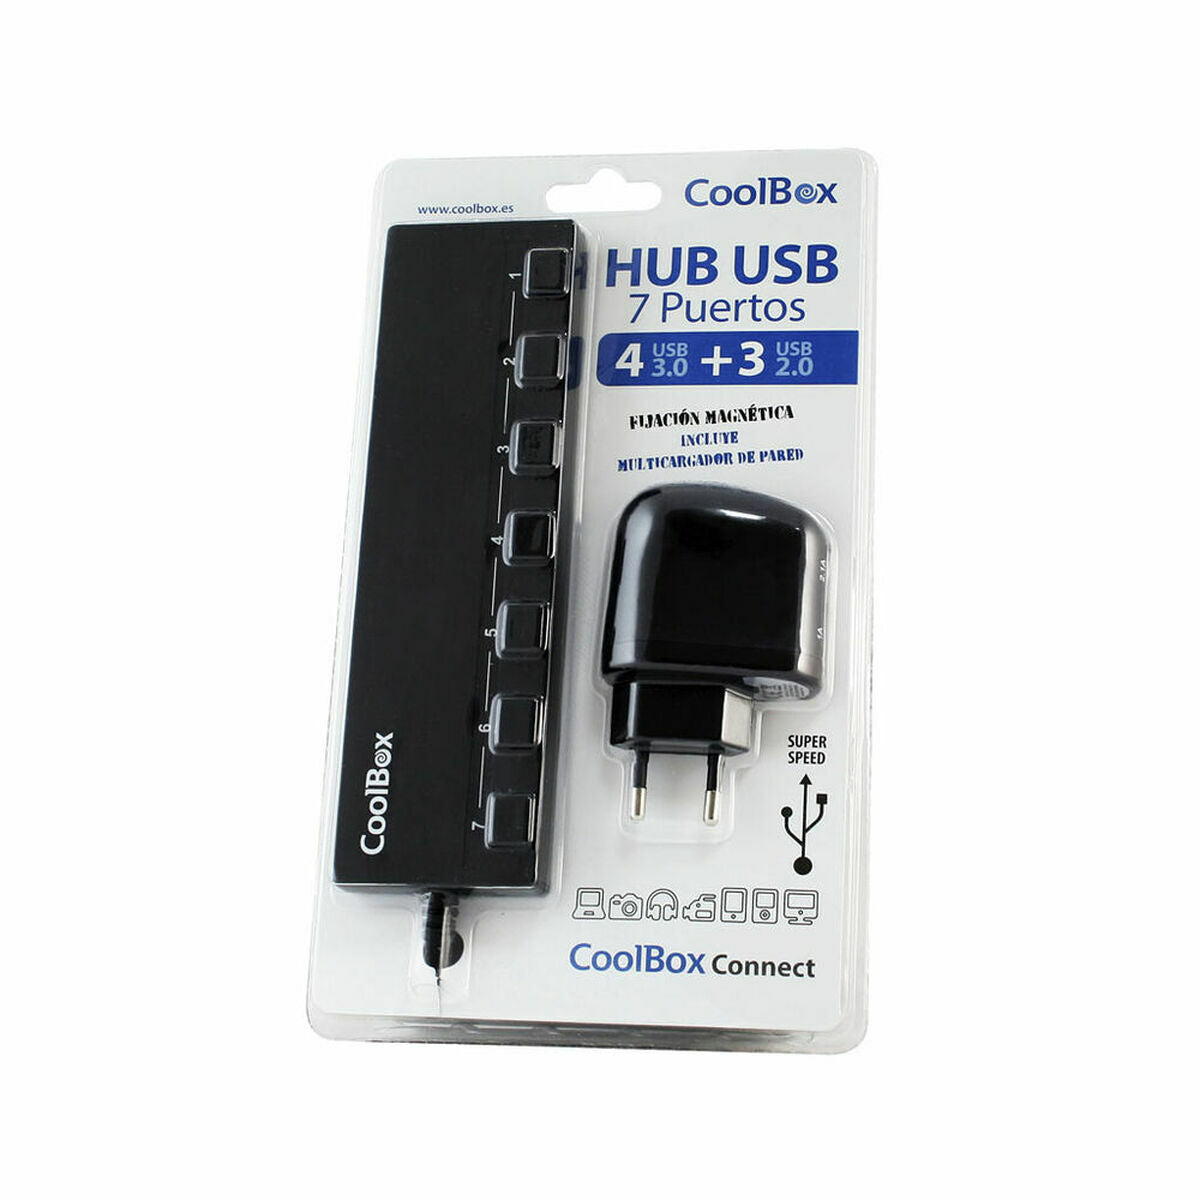 USB Hub CoolBox HUBCOO356A Black, CoolBox, Computing, Accessories, usb-hub-coolbox-hubcoo356a-black, :Black, black friday / cyber monday, Brand_CoolBox, category-reference-2609, category-reference-2803, category-reference-2829, category-reference-t-19685, category-reference-t-19908, category-reference-t-21352, Condition_NEW, networks/wiring, Price_20 - 50, Teleworking, RiotNook